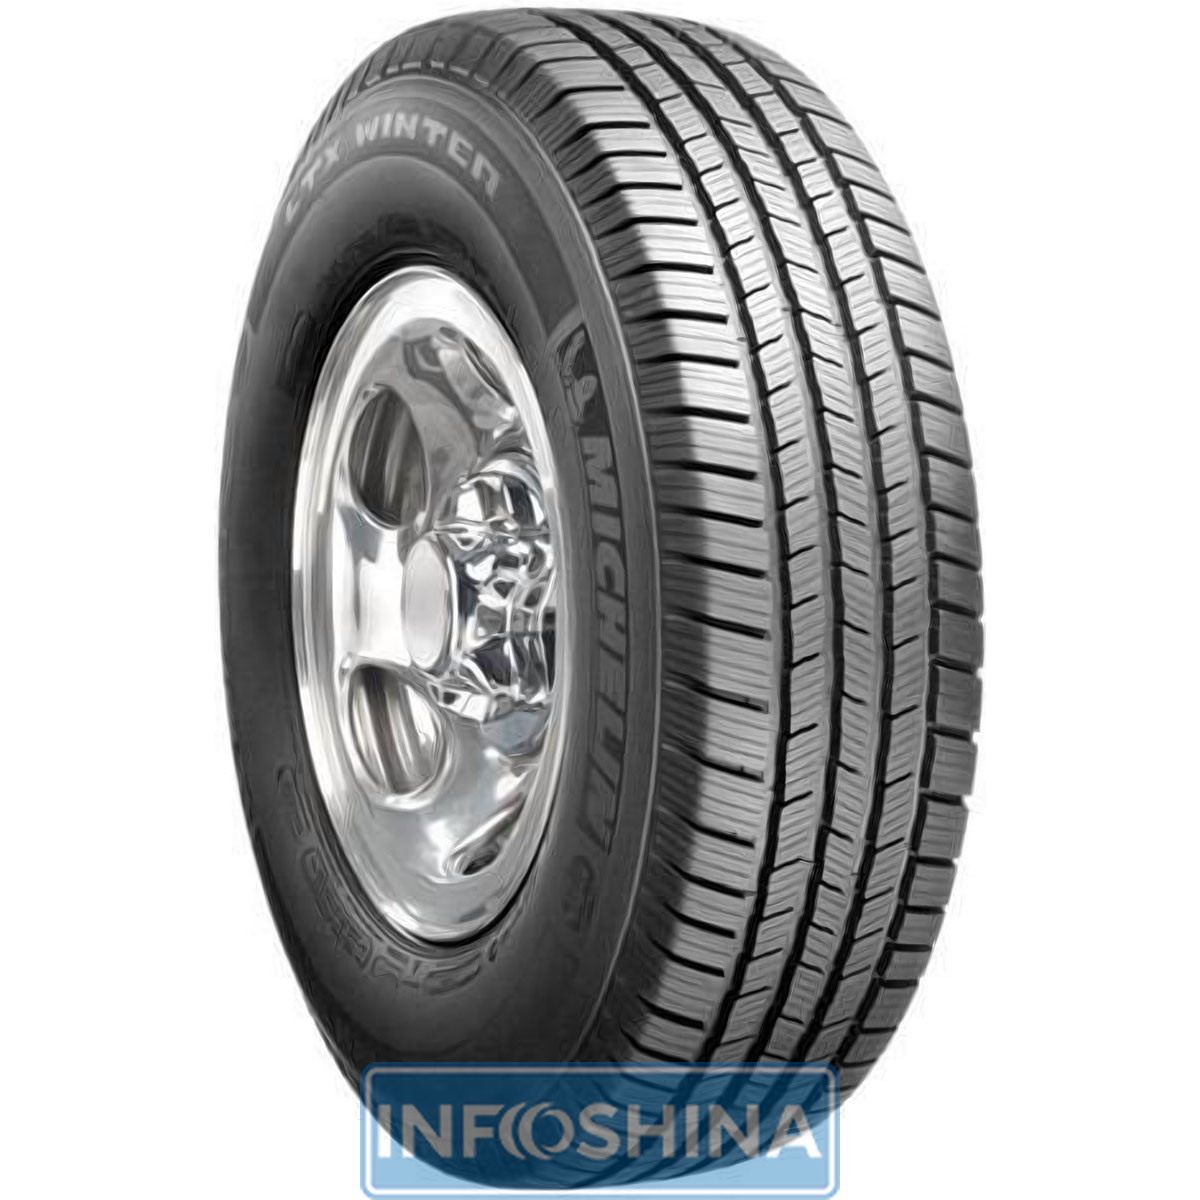 Купить шины Michelin LTX Winter 225/75 R16 115/112R